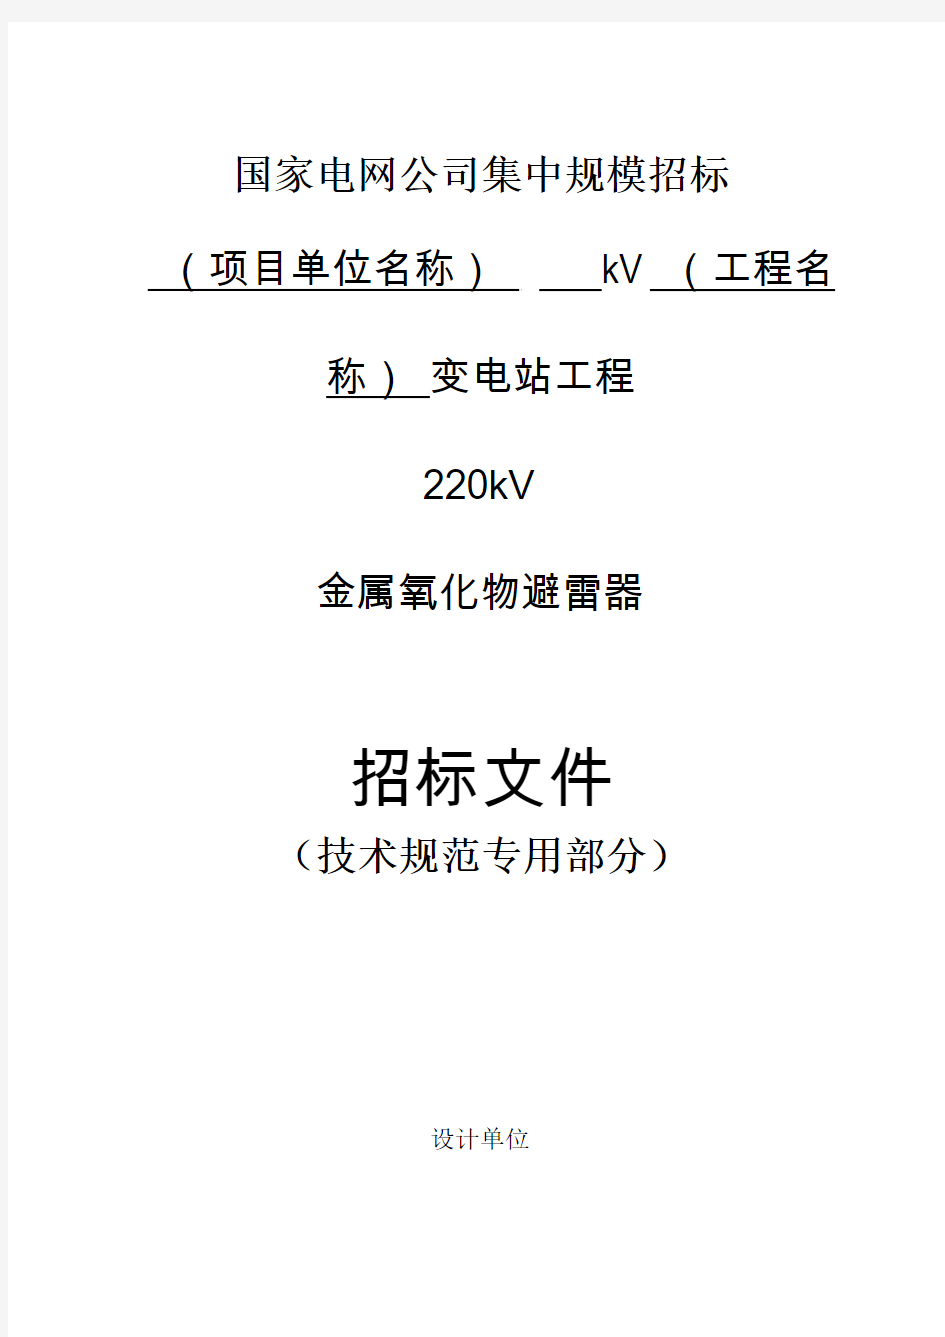 220kV避雷器技术范本(专用部分) 12-30